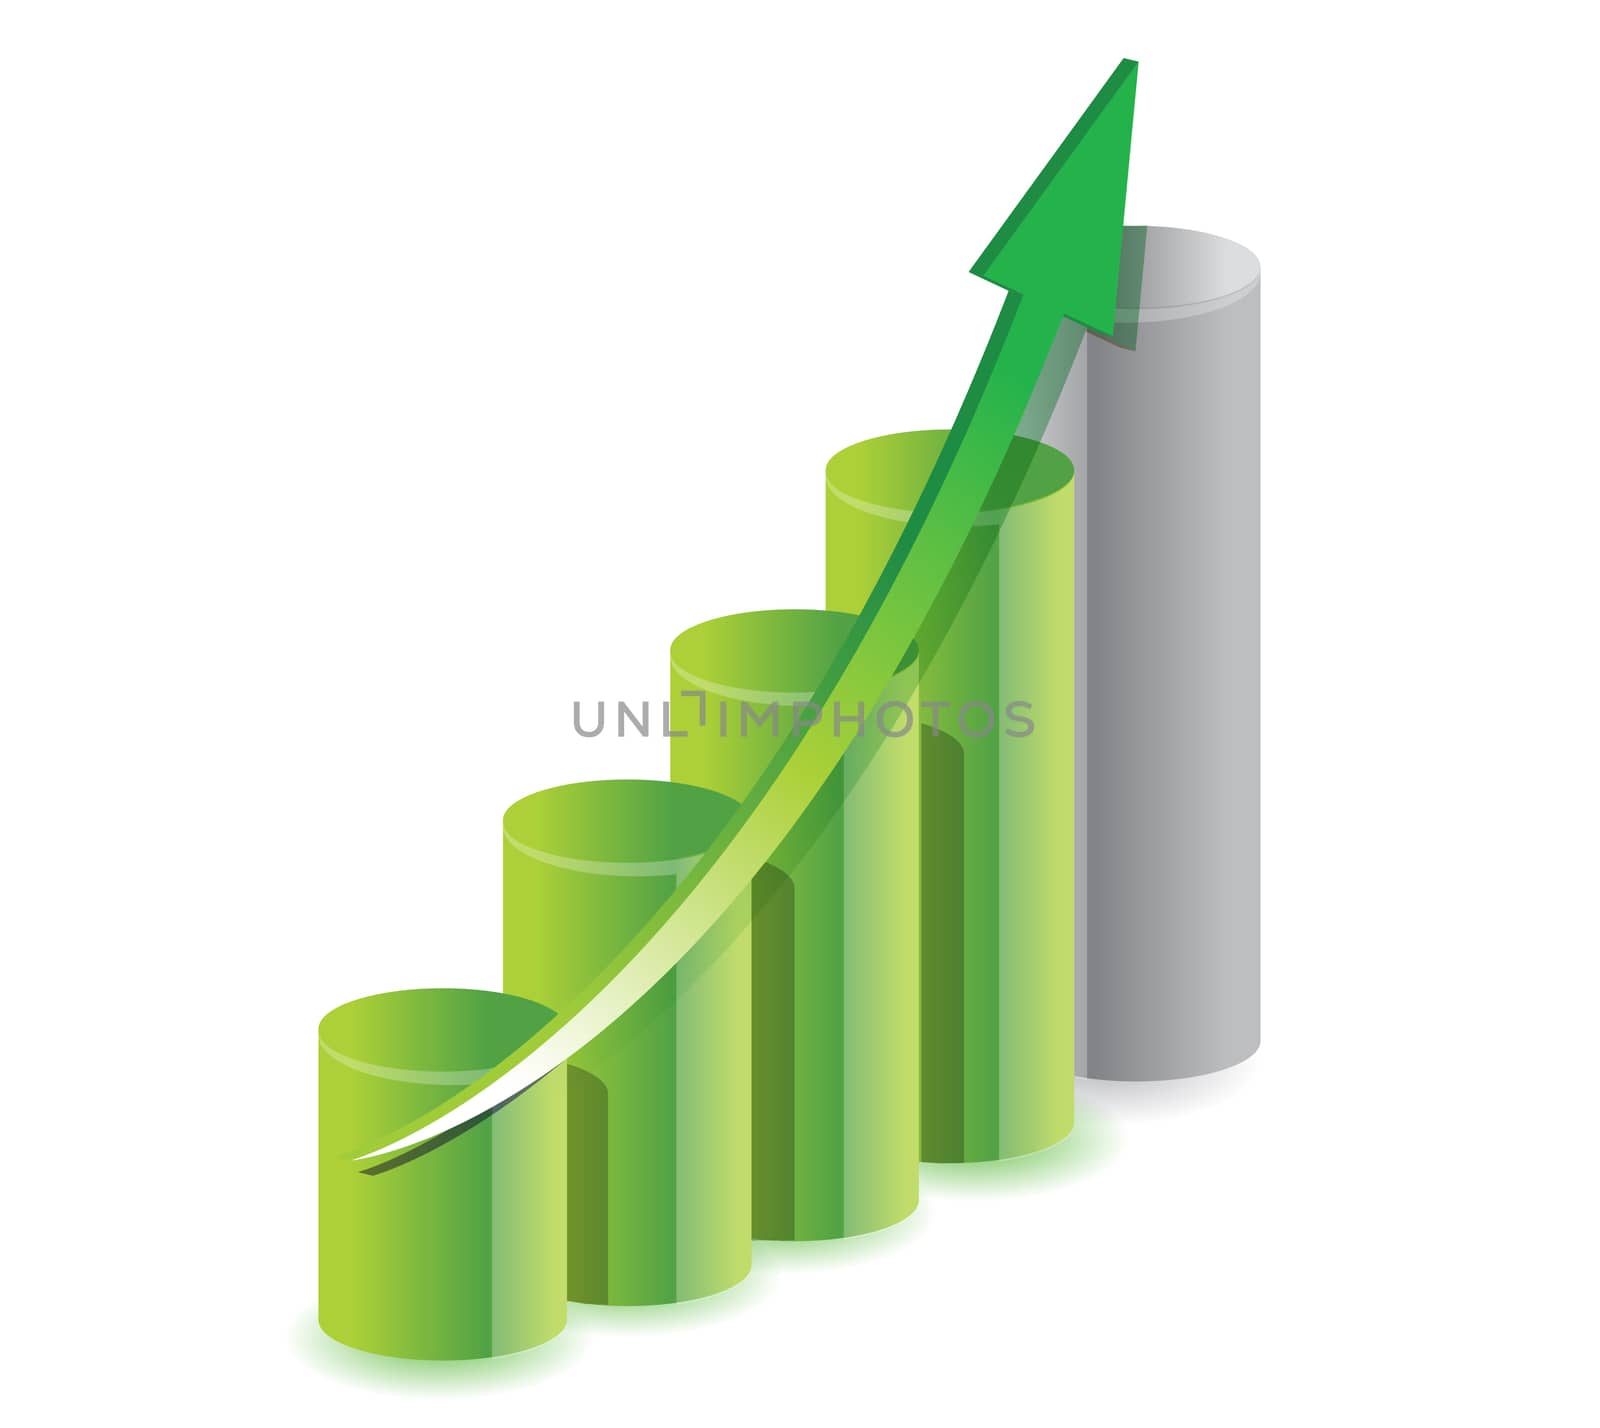 Green business graph illustration over white